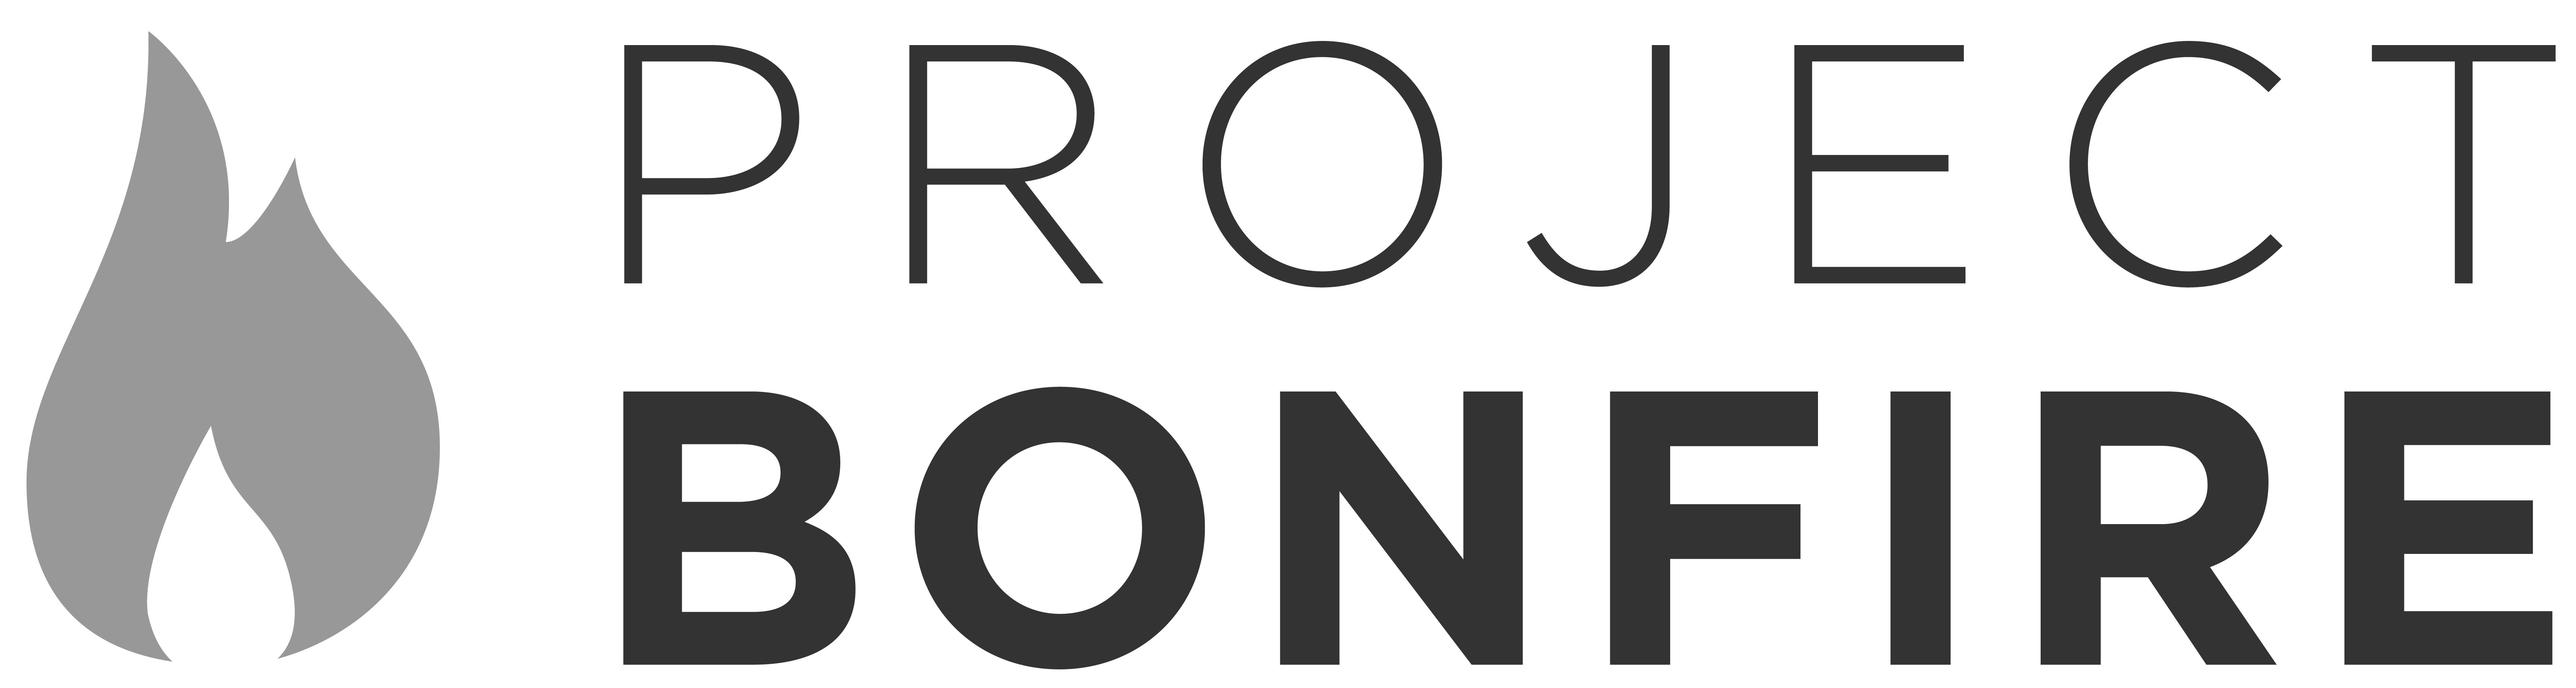 in2innovation Project Bonfire logo